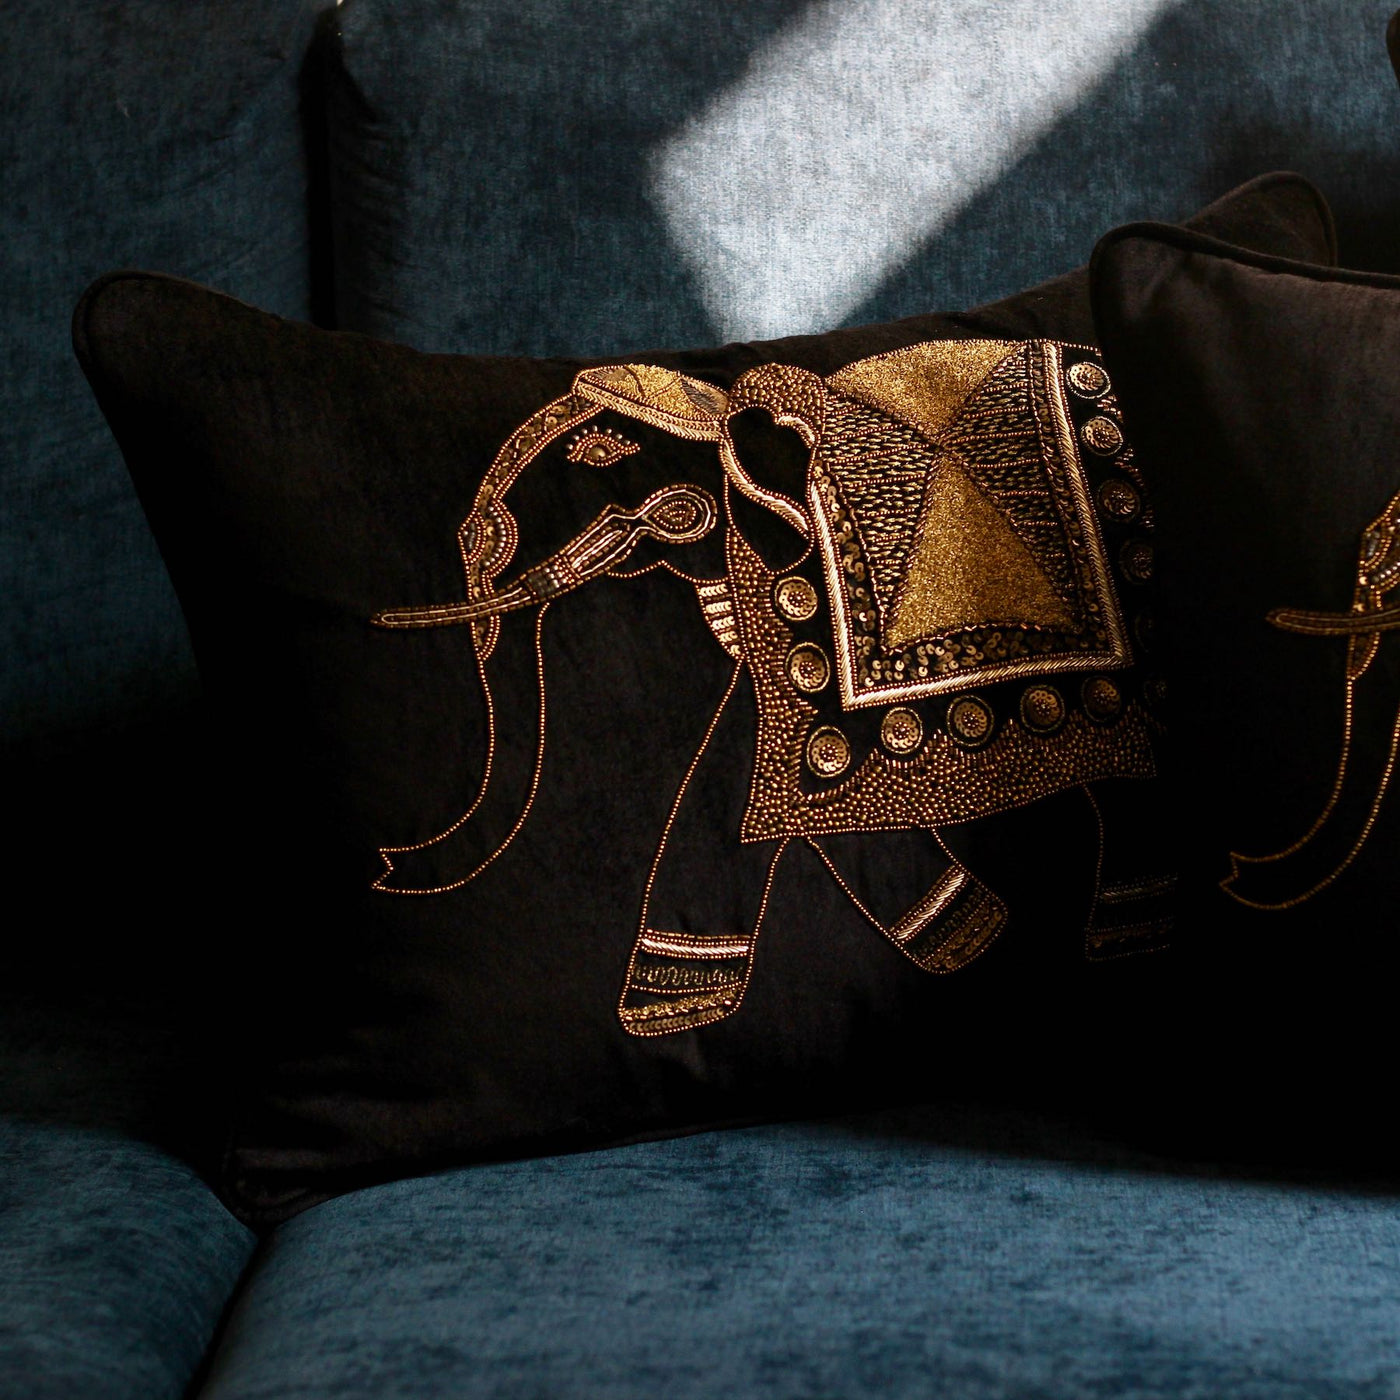 black velvet sofa cushion with golden embroidered elephant design